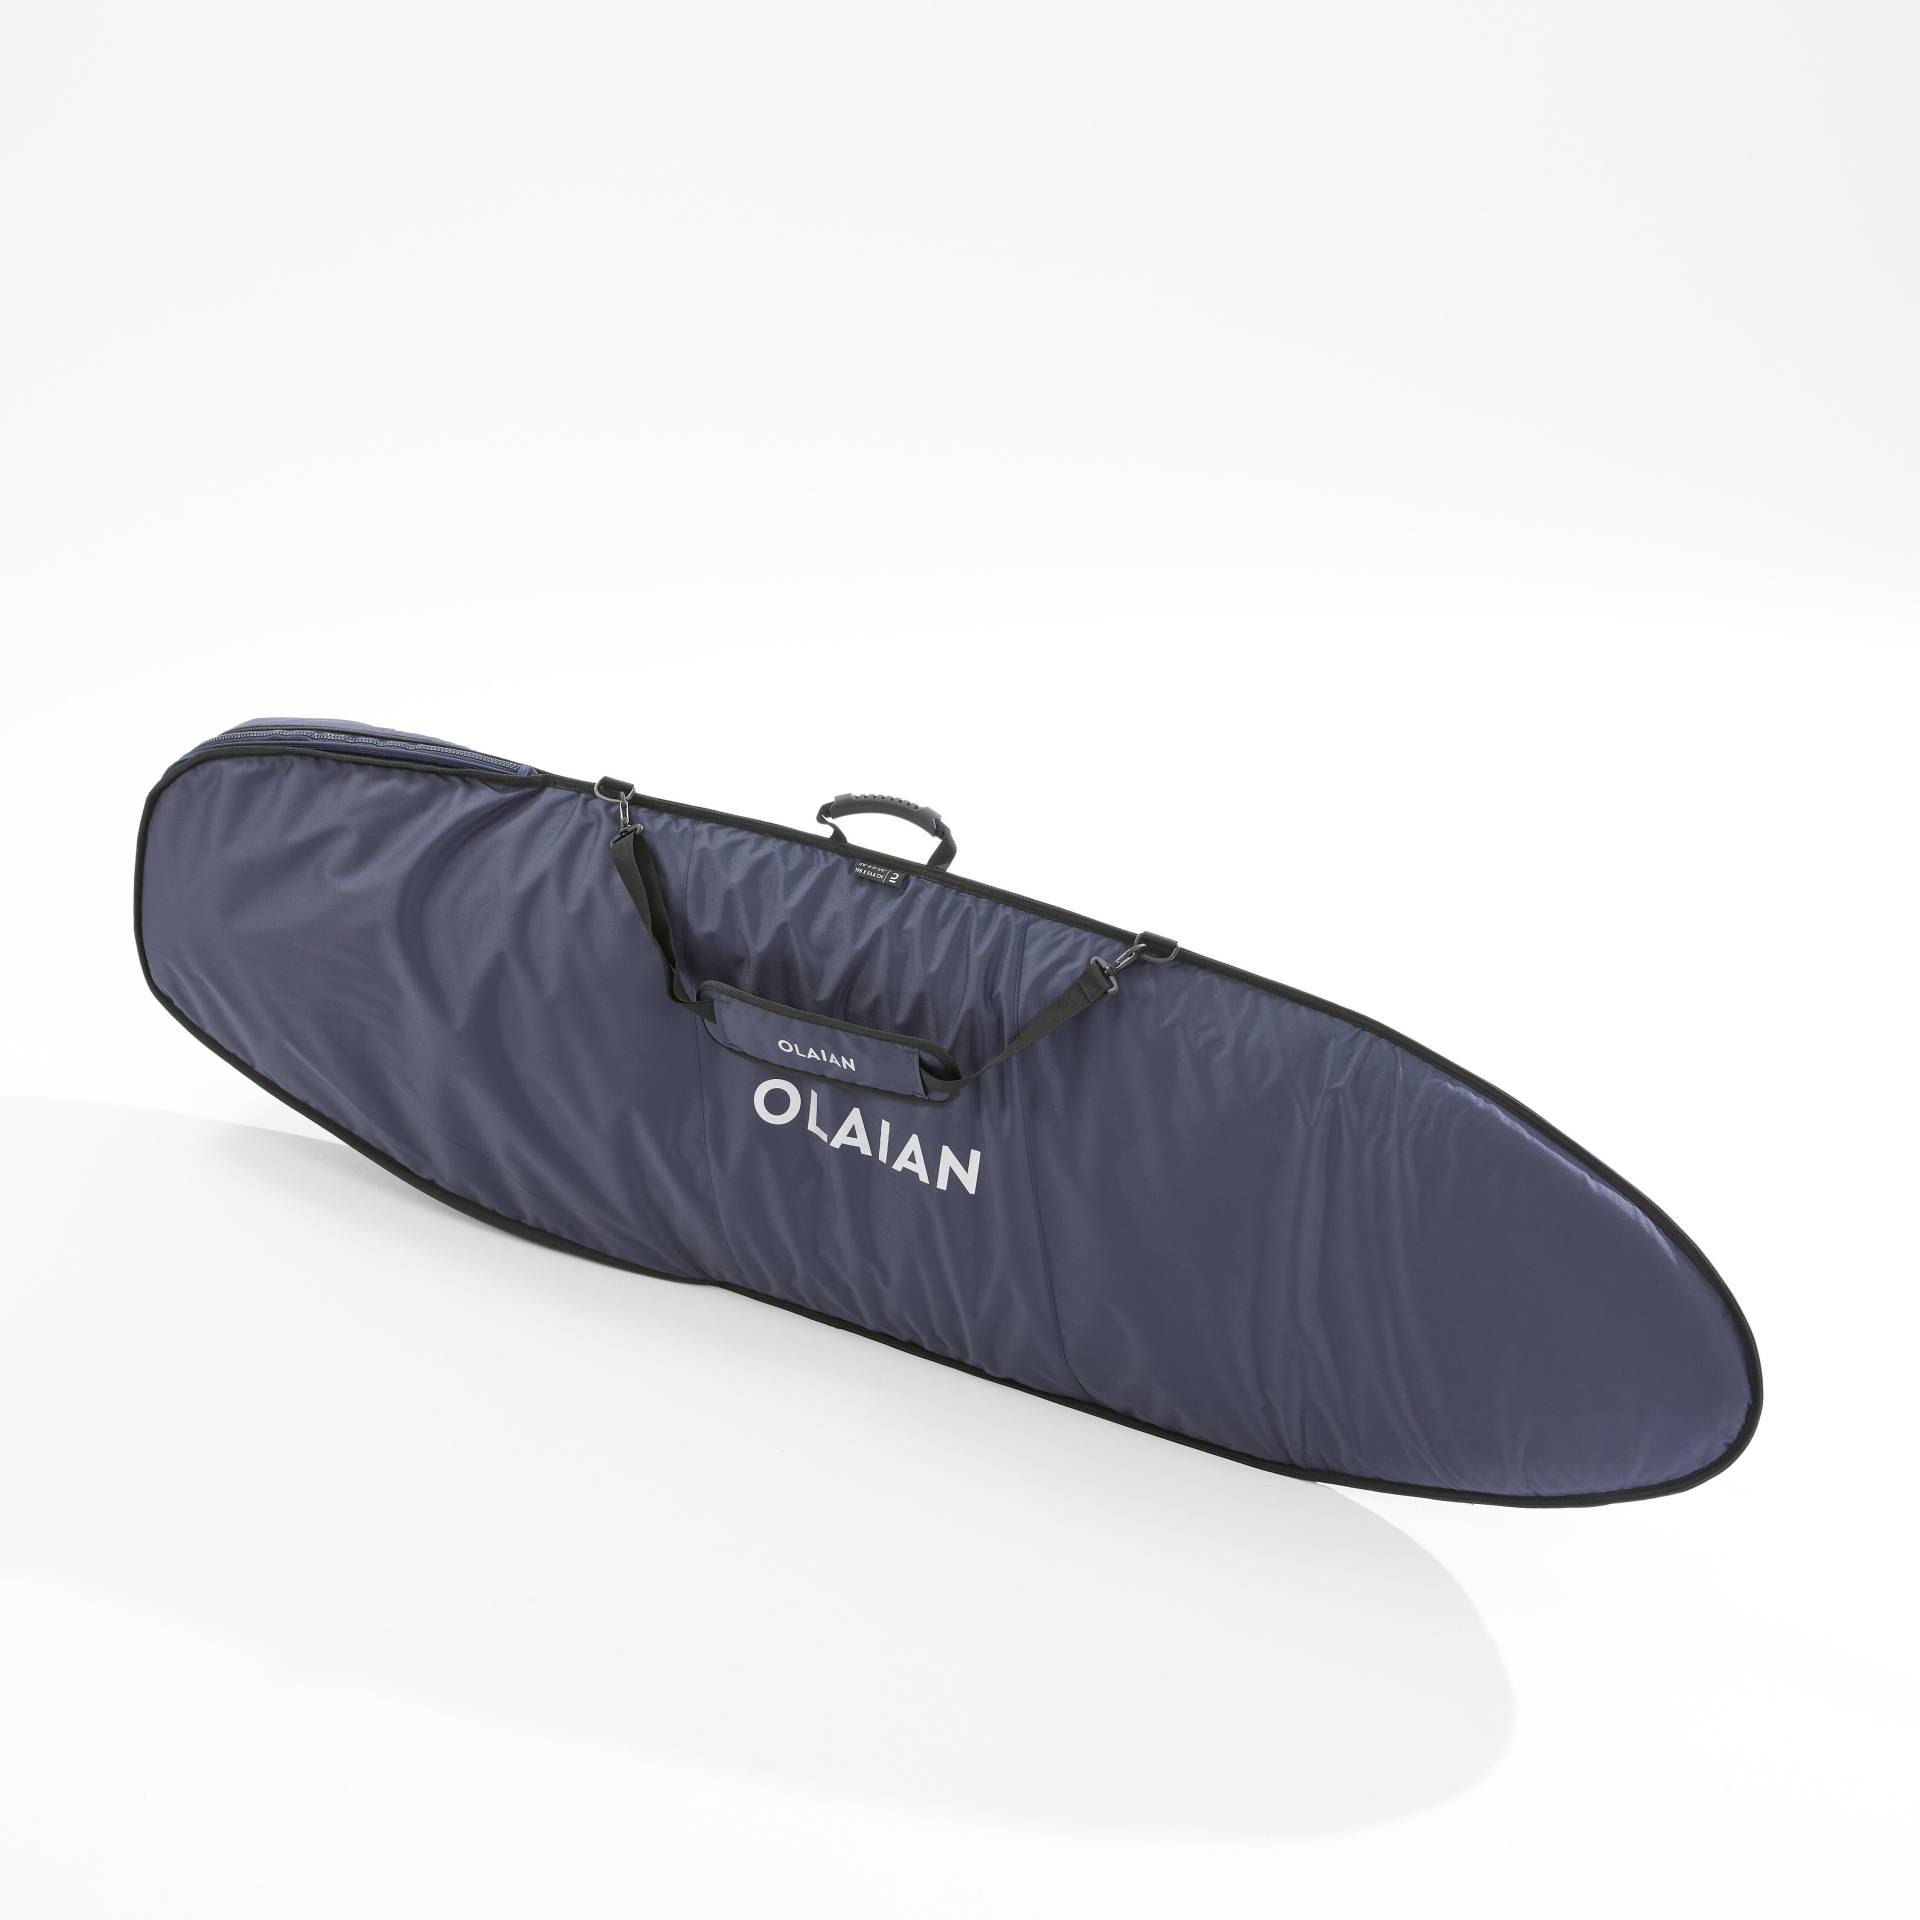 Boardbag Surfboard 900 max. 6'1" × 21 1/2" schwarzblau von OLAIAN